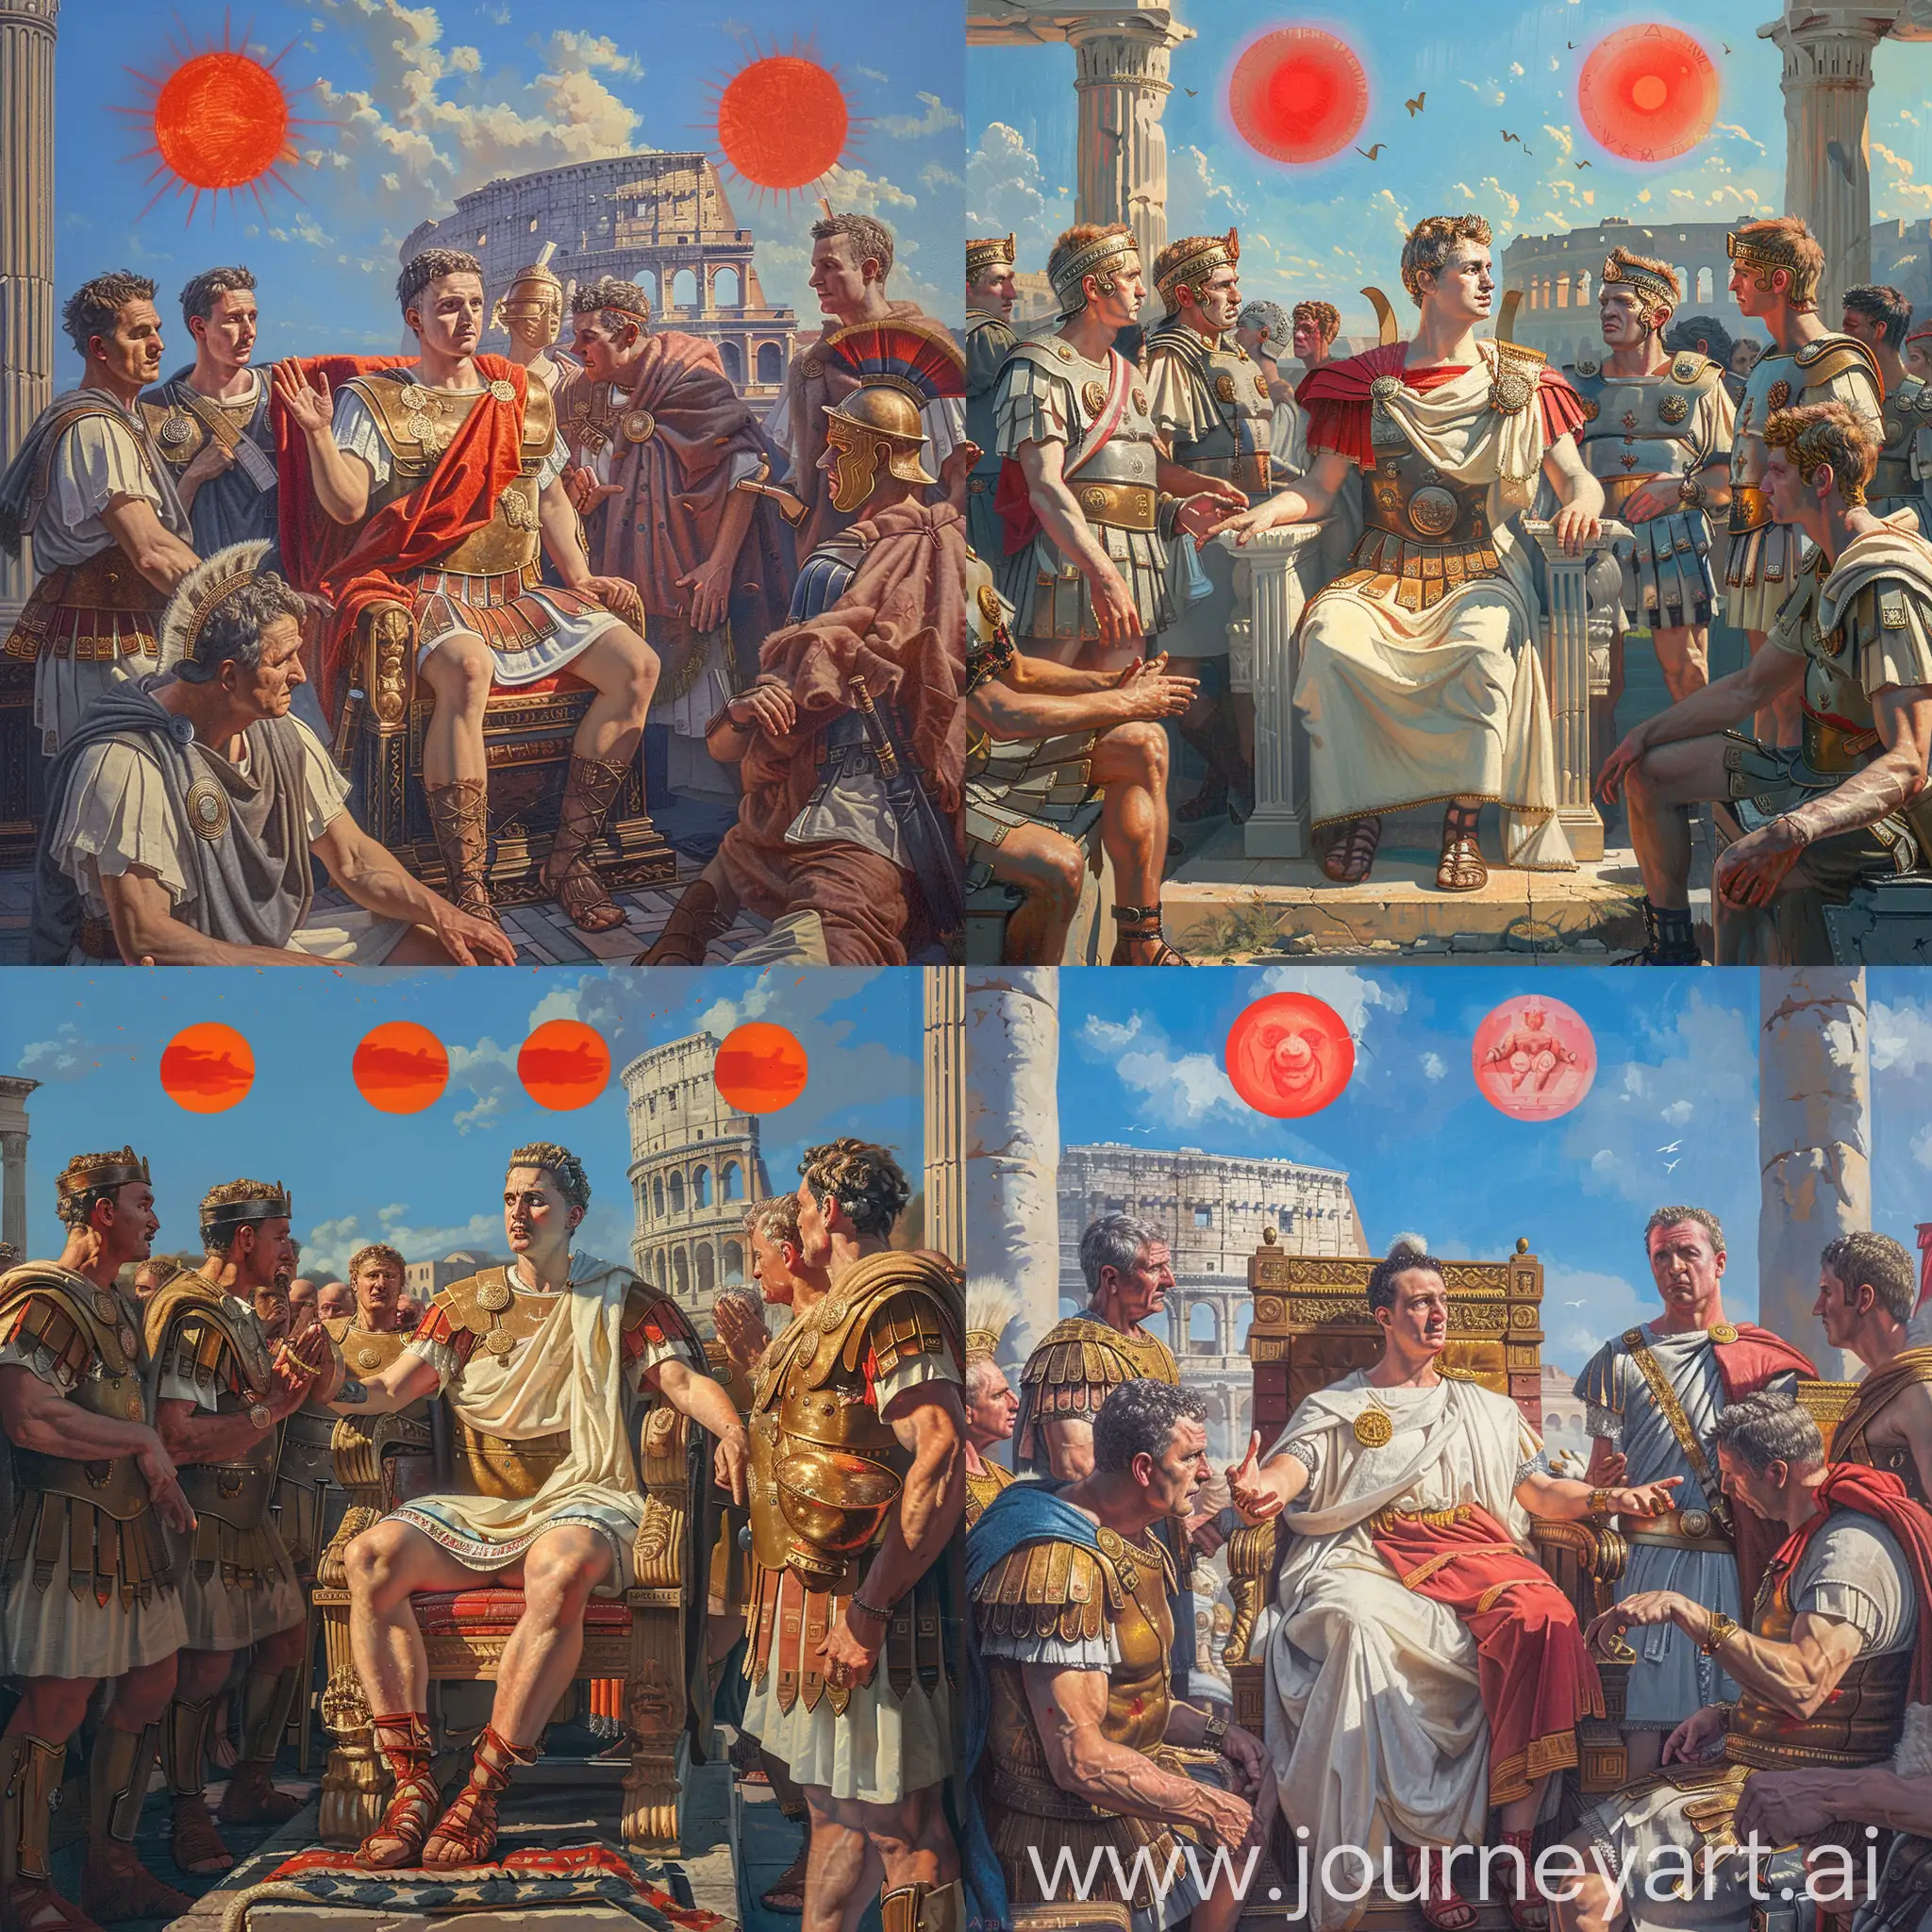 Elegant-Julius-Caesar-on-Imperial-Throne-with-Roman-Guards-Ancient-Rome-Colosseum-Setting